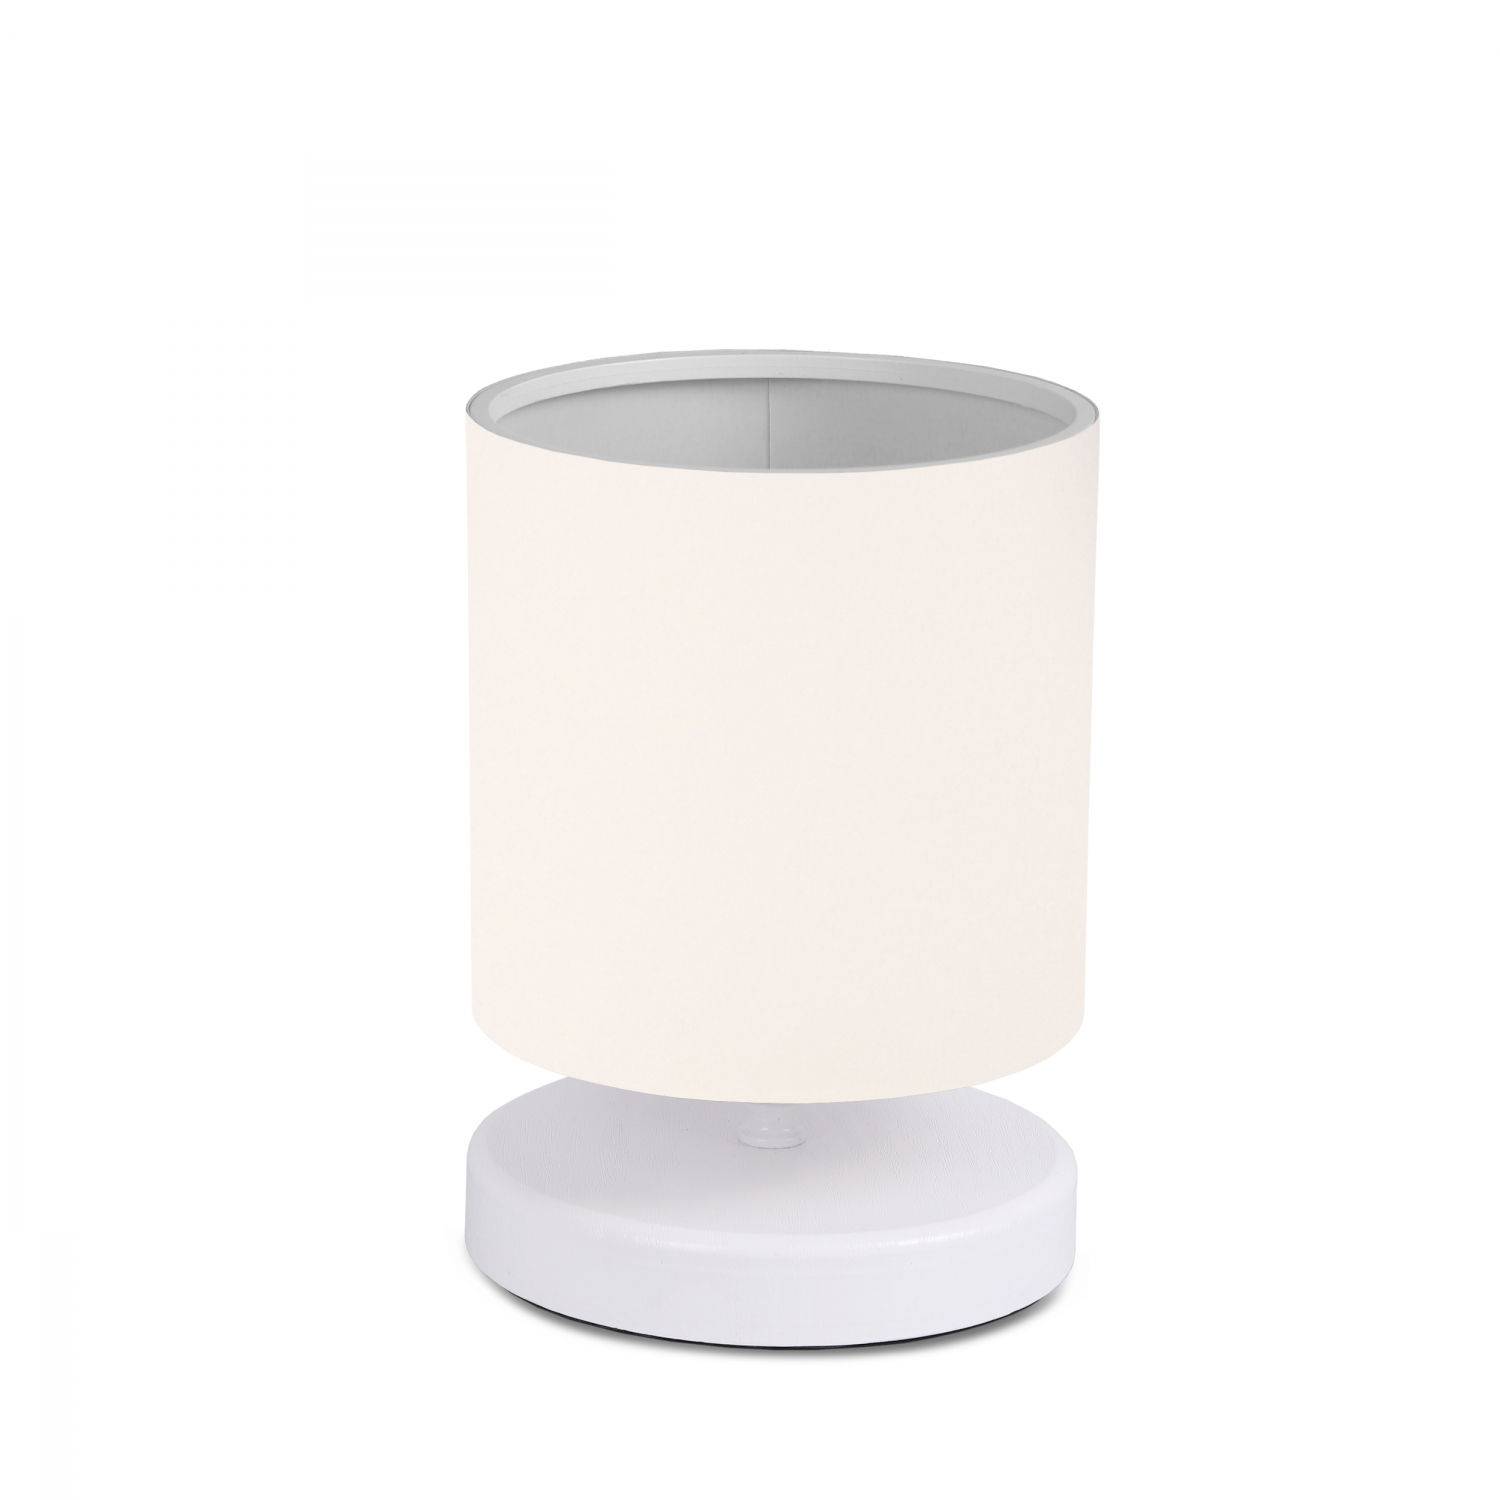 Lampada da tavolo Arkas H22cm Piede bianco e tessuto bianco panna